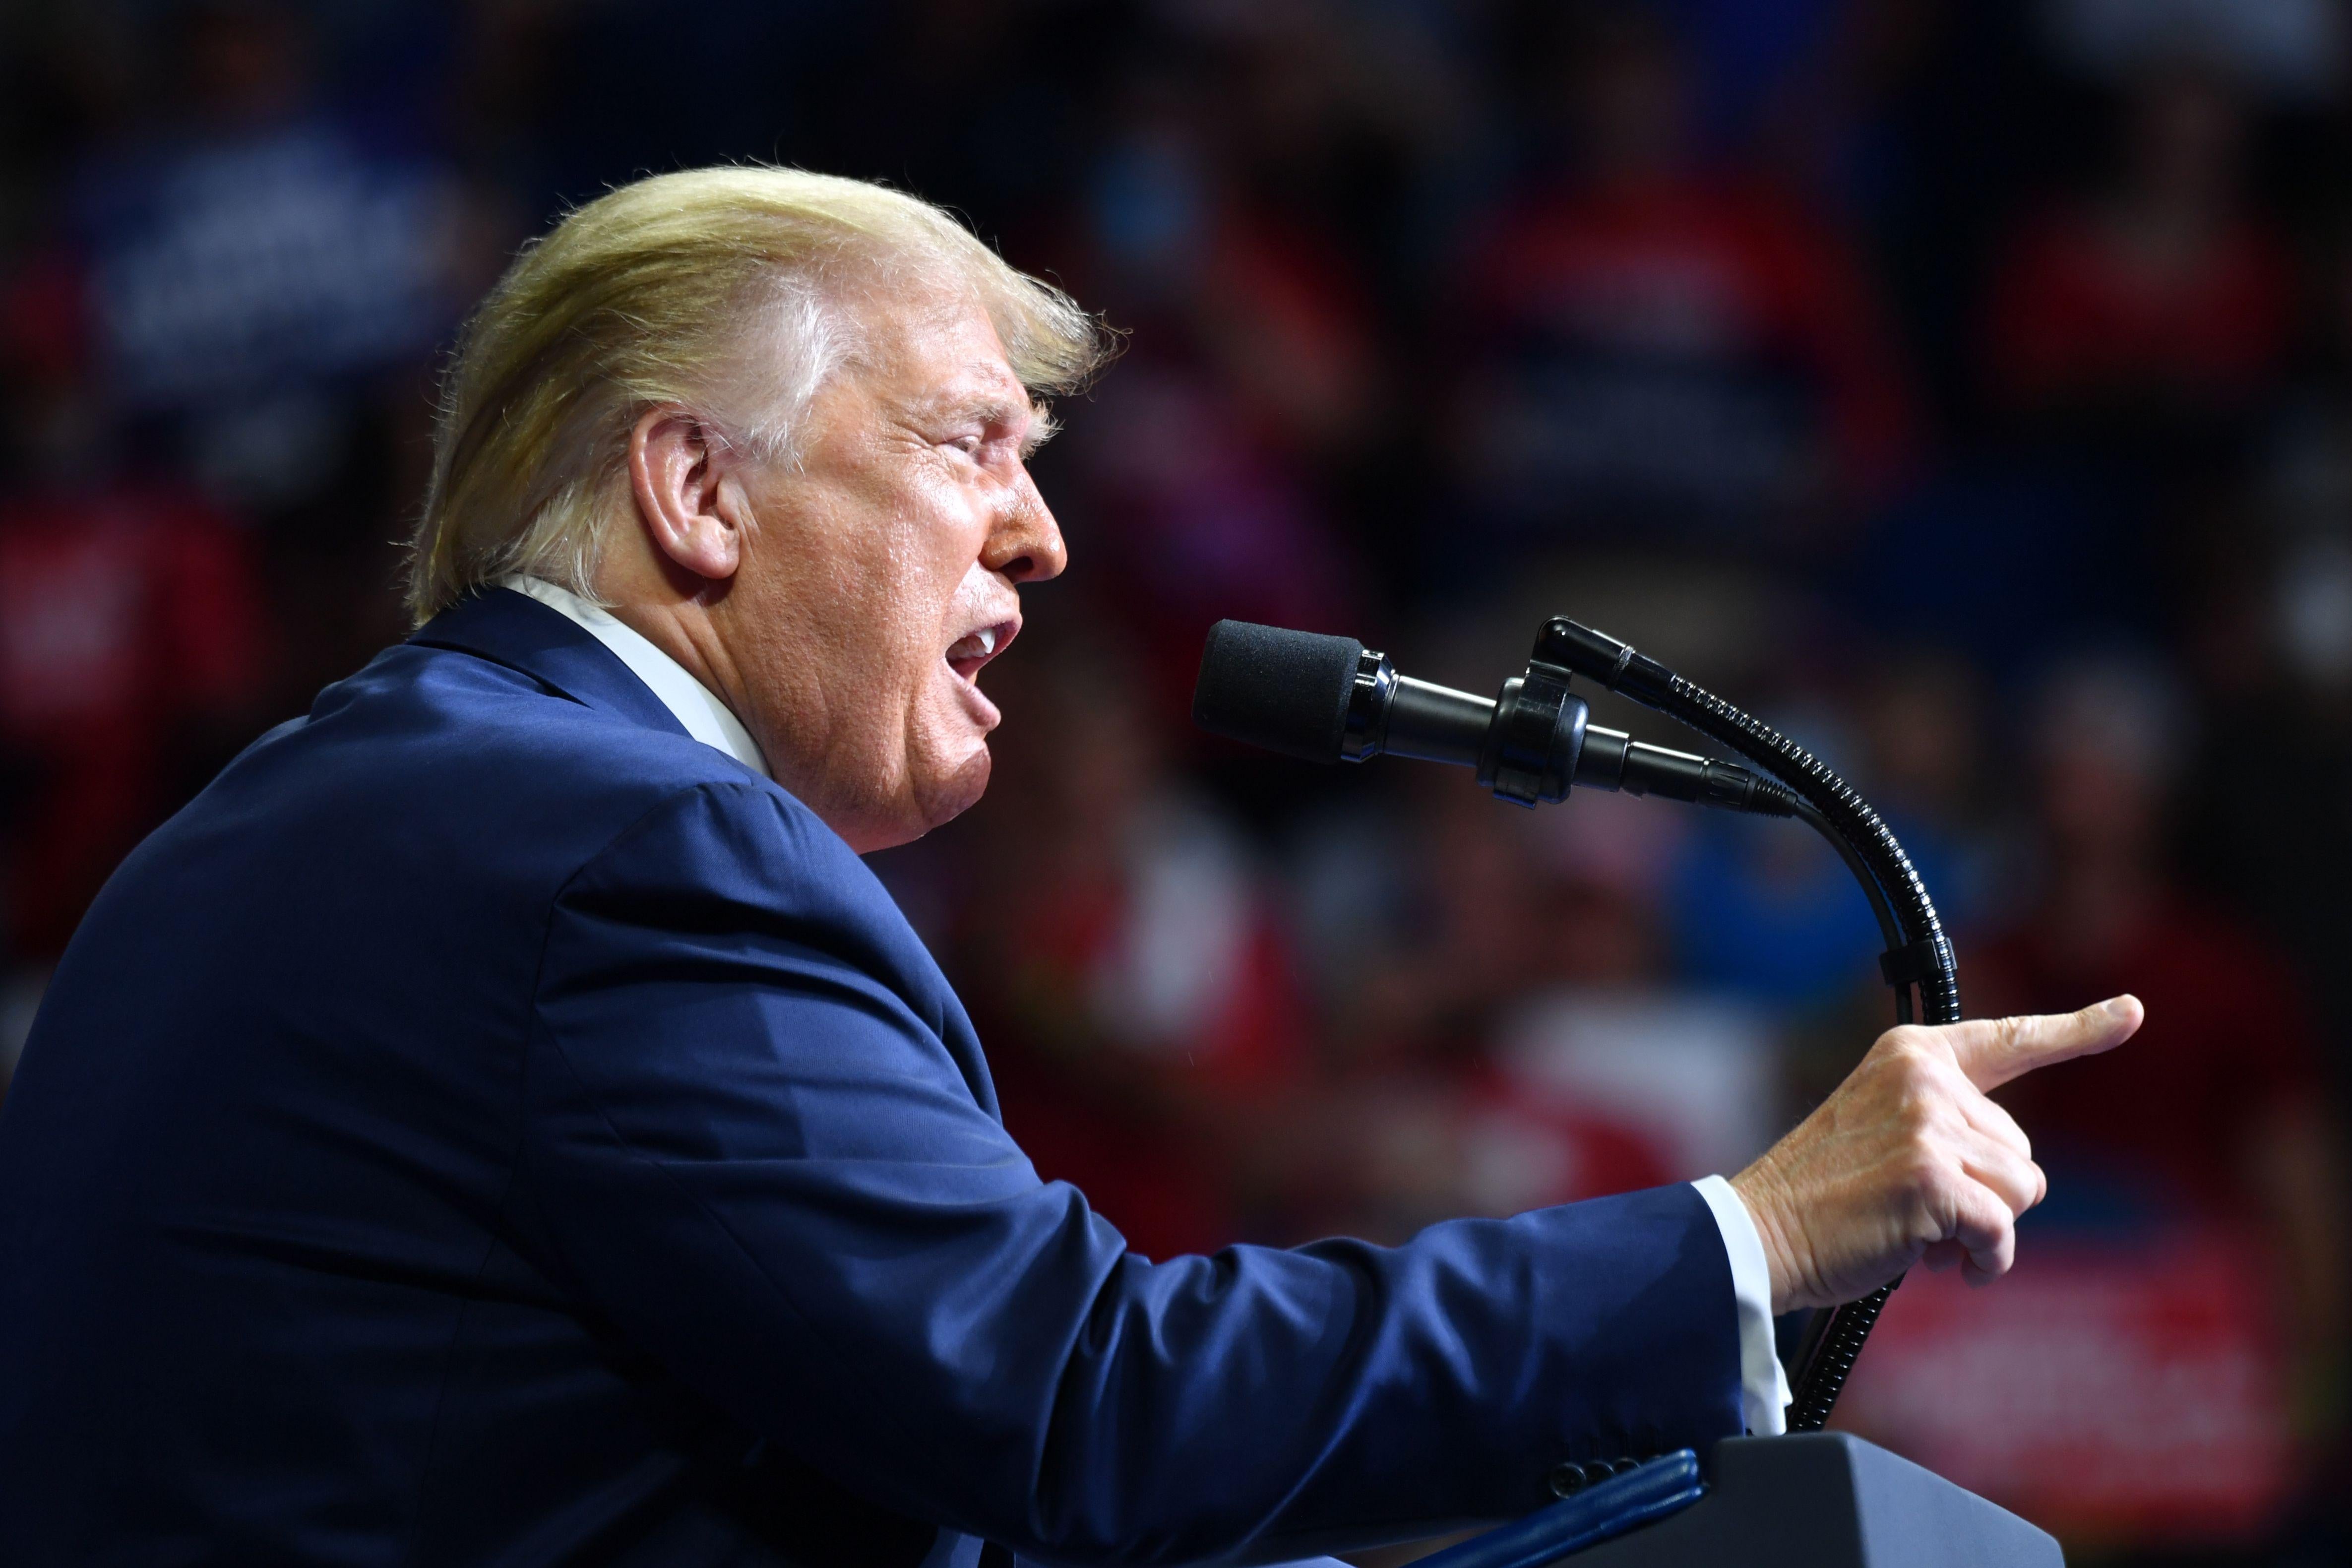 Donald Trump at a podium at his Tulsa rally, pointing his fingers and grimacing.